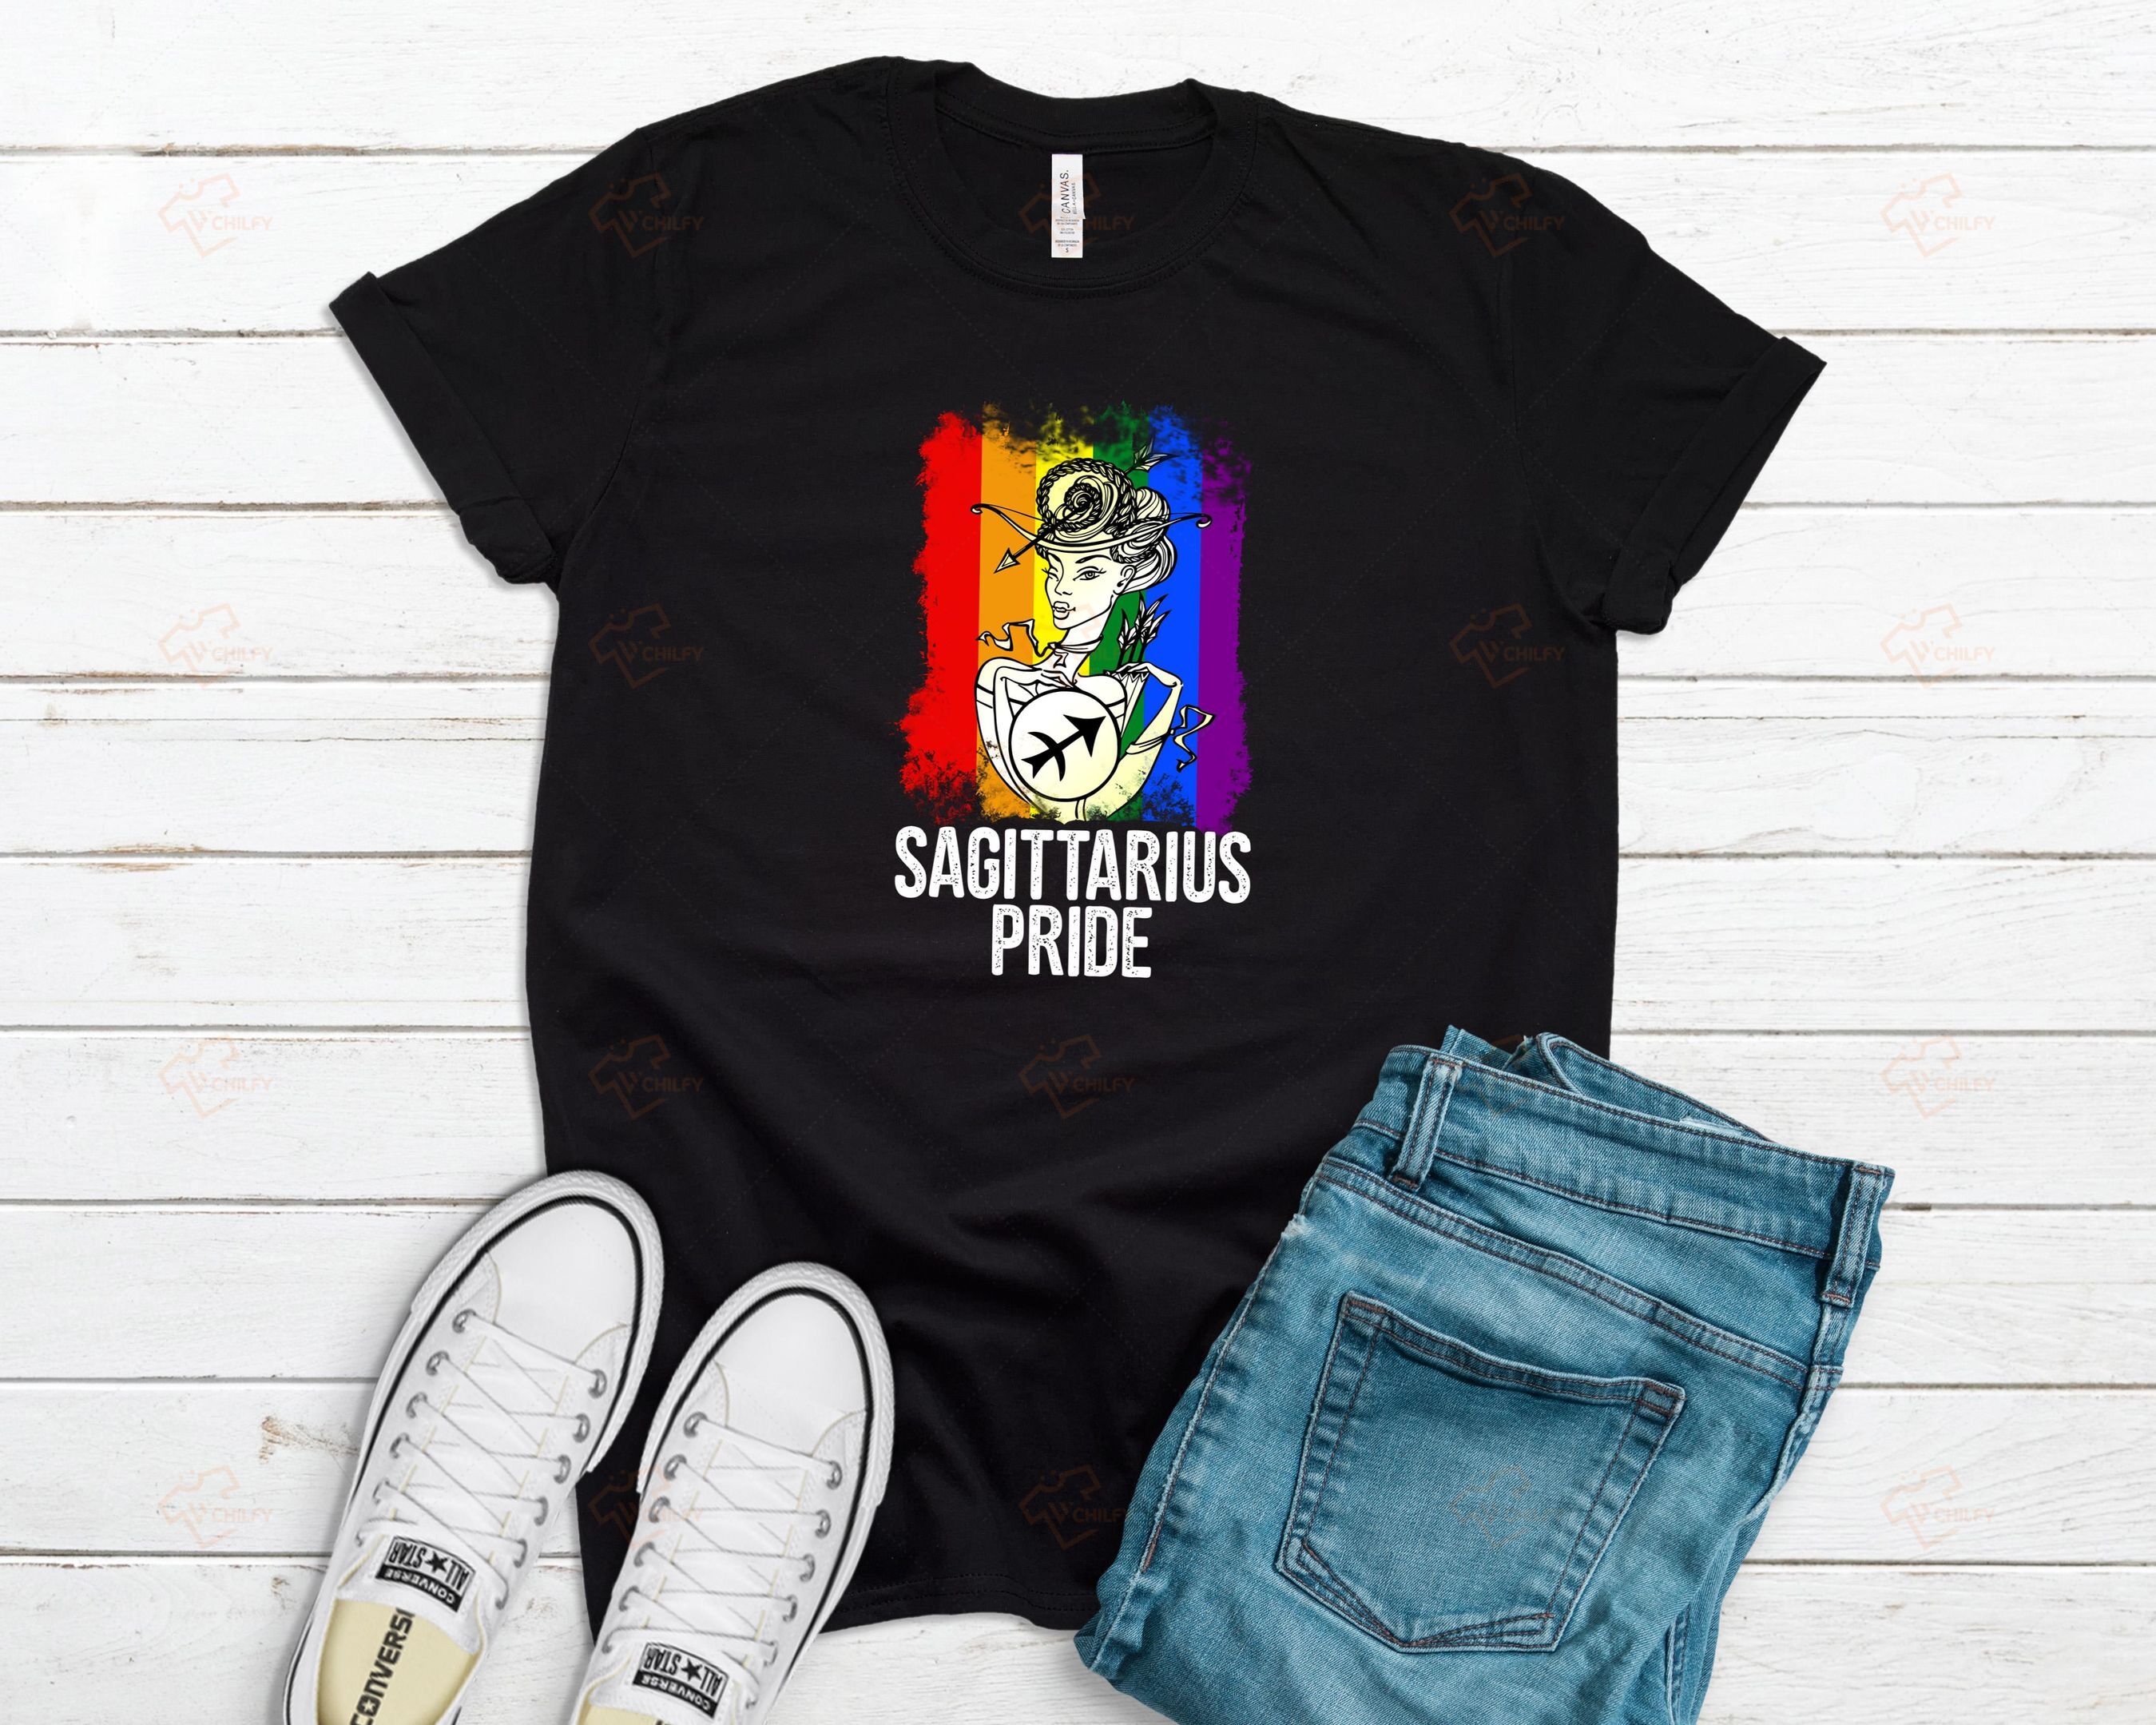 12 Signs Of The Zodiac Sagittarius Shirt, Lgbt Shirt, Lgbt Pride Shirt, Lgbt Queer, Lgbt Zodiac Shirt